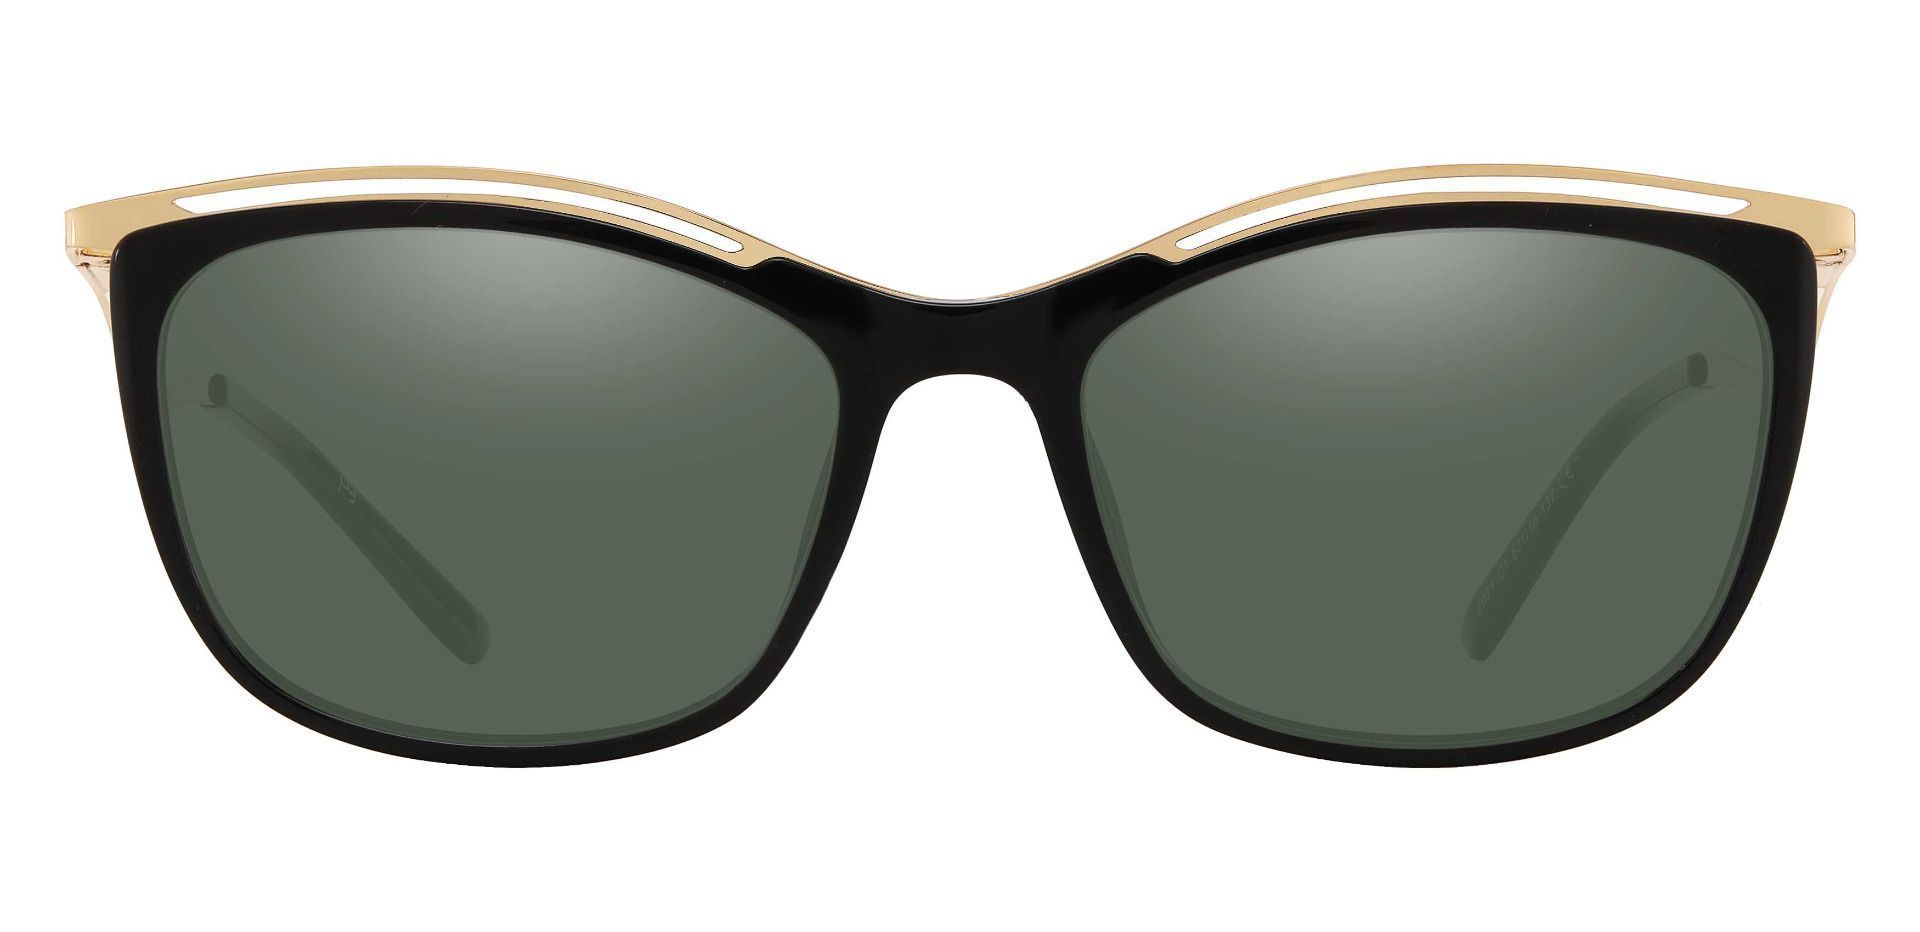 Enola Cat Eye Progressive Sunglasses - Black Frame With Green Lenses